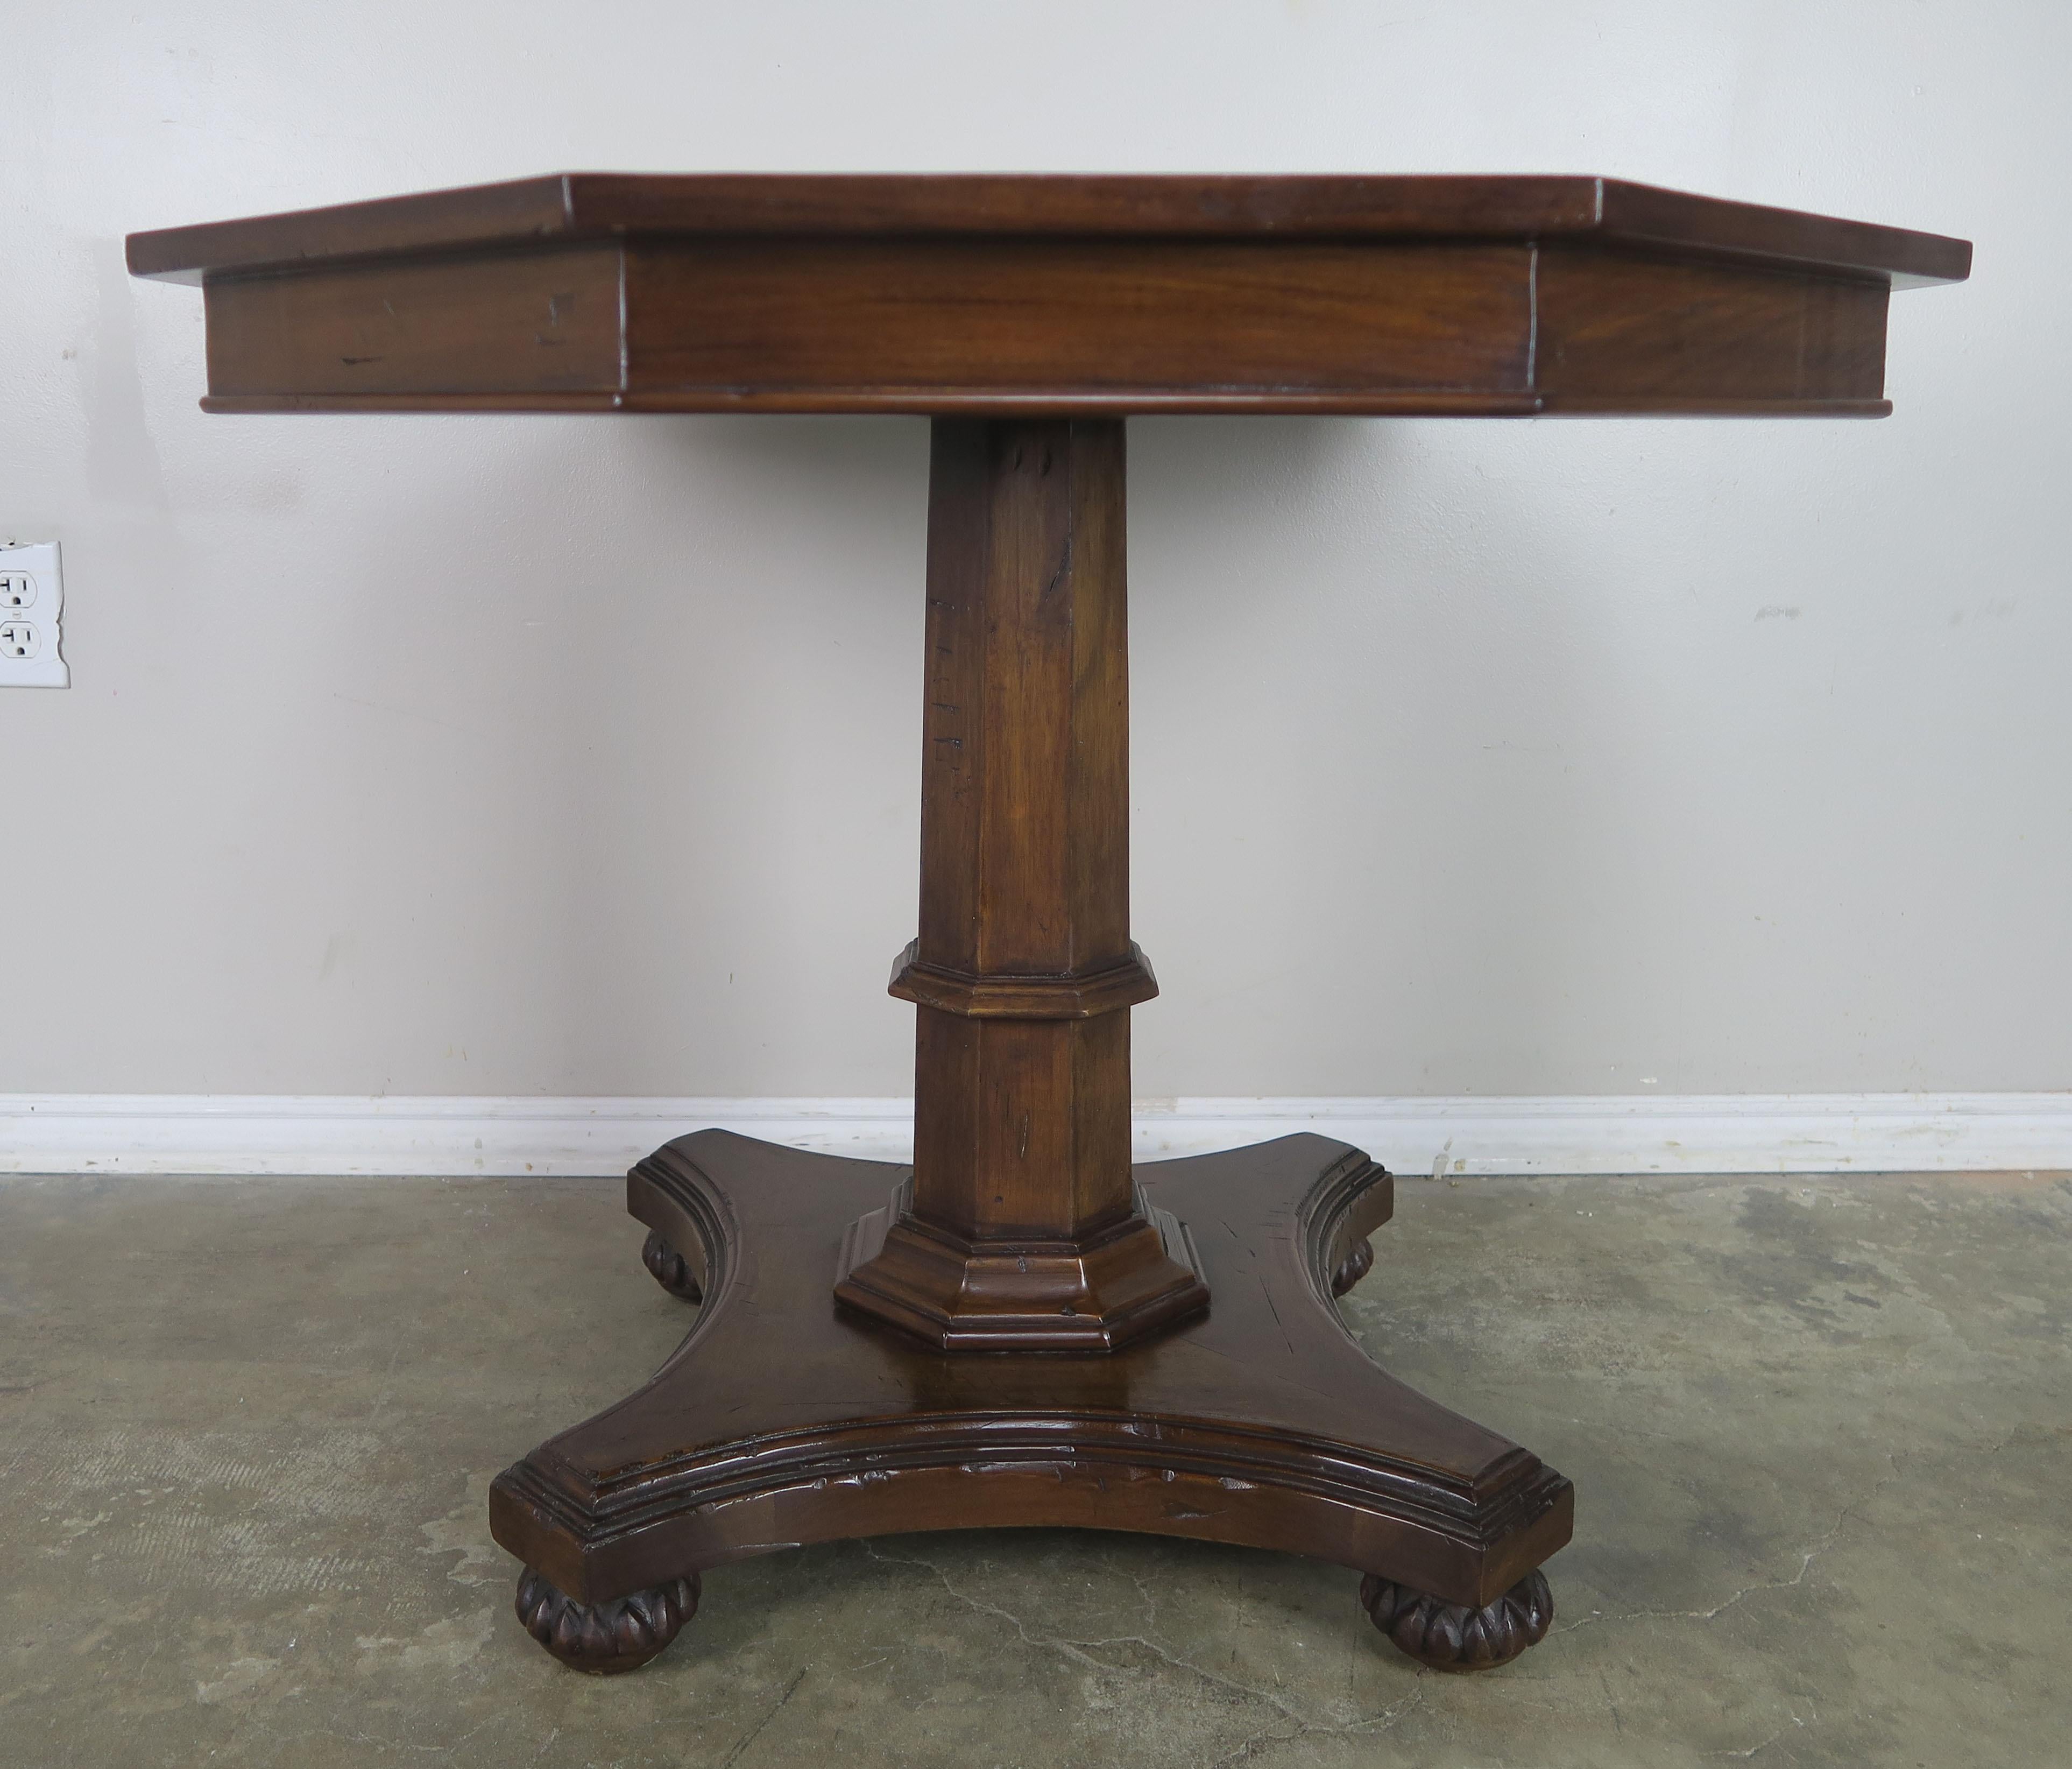 Inlaid Italian style 20th century pedestal table with starburst design.